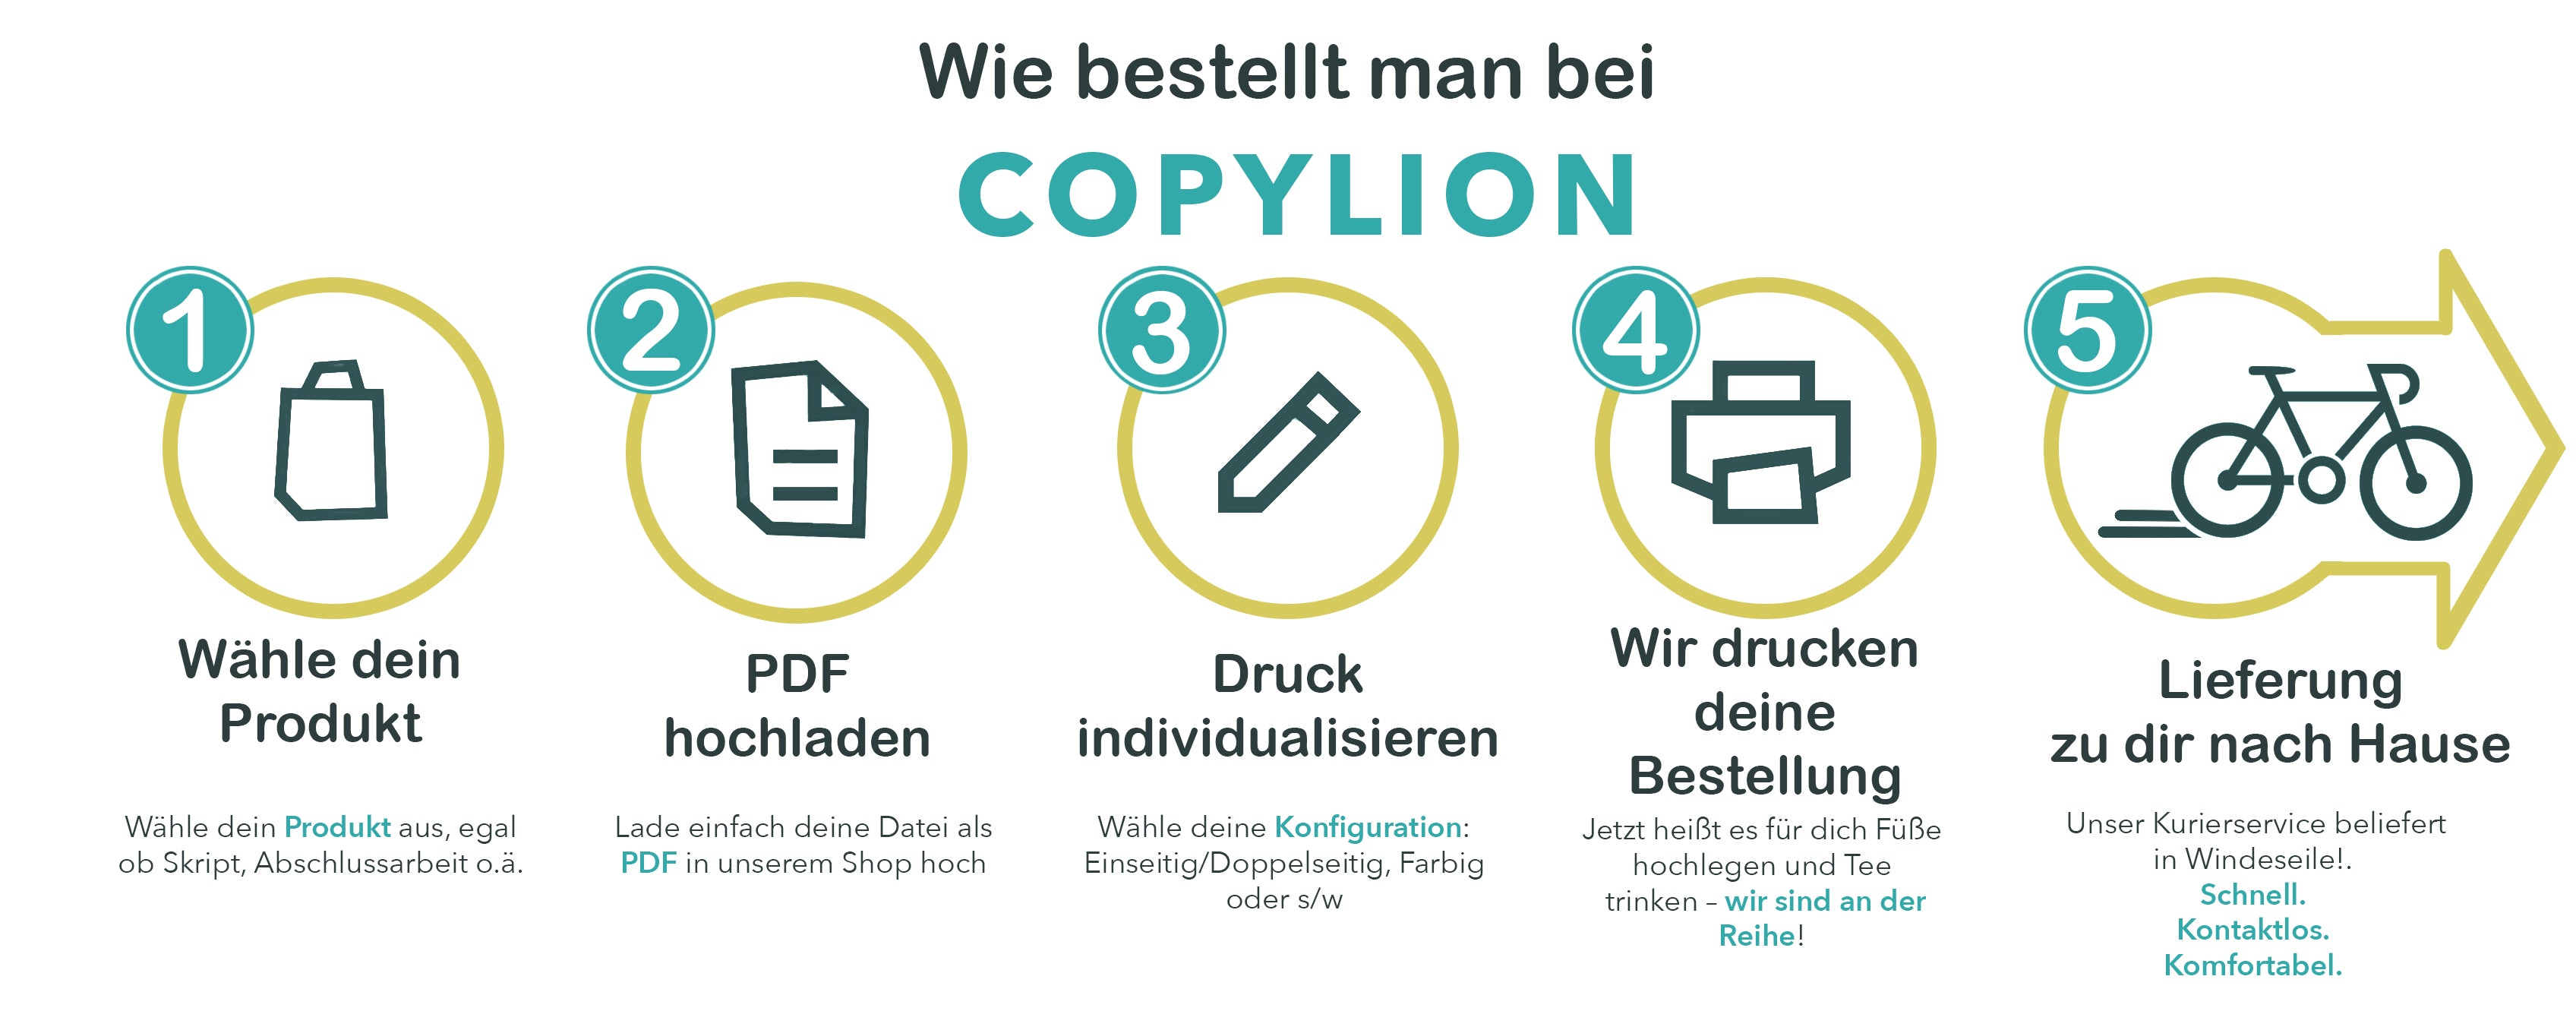 Copyshop Würzburg Copylion